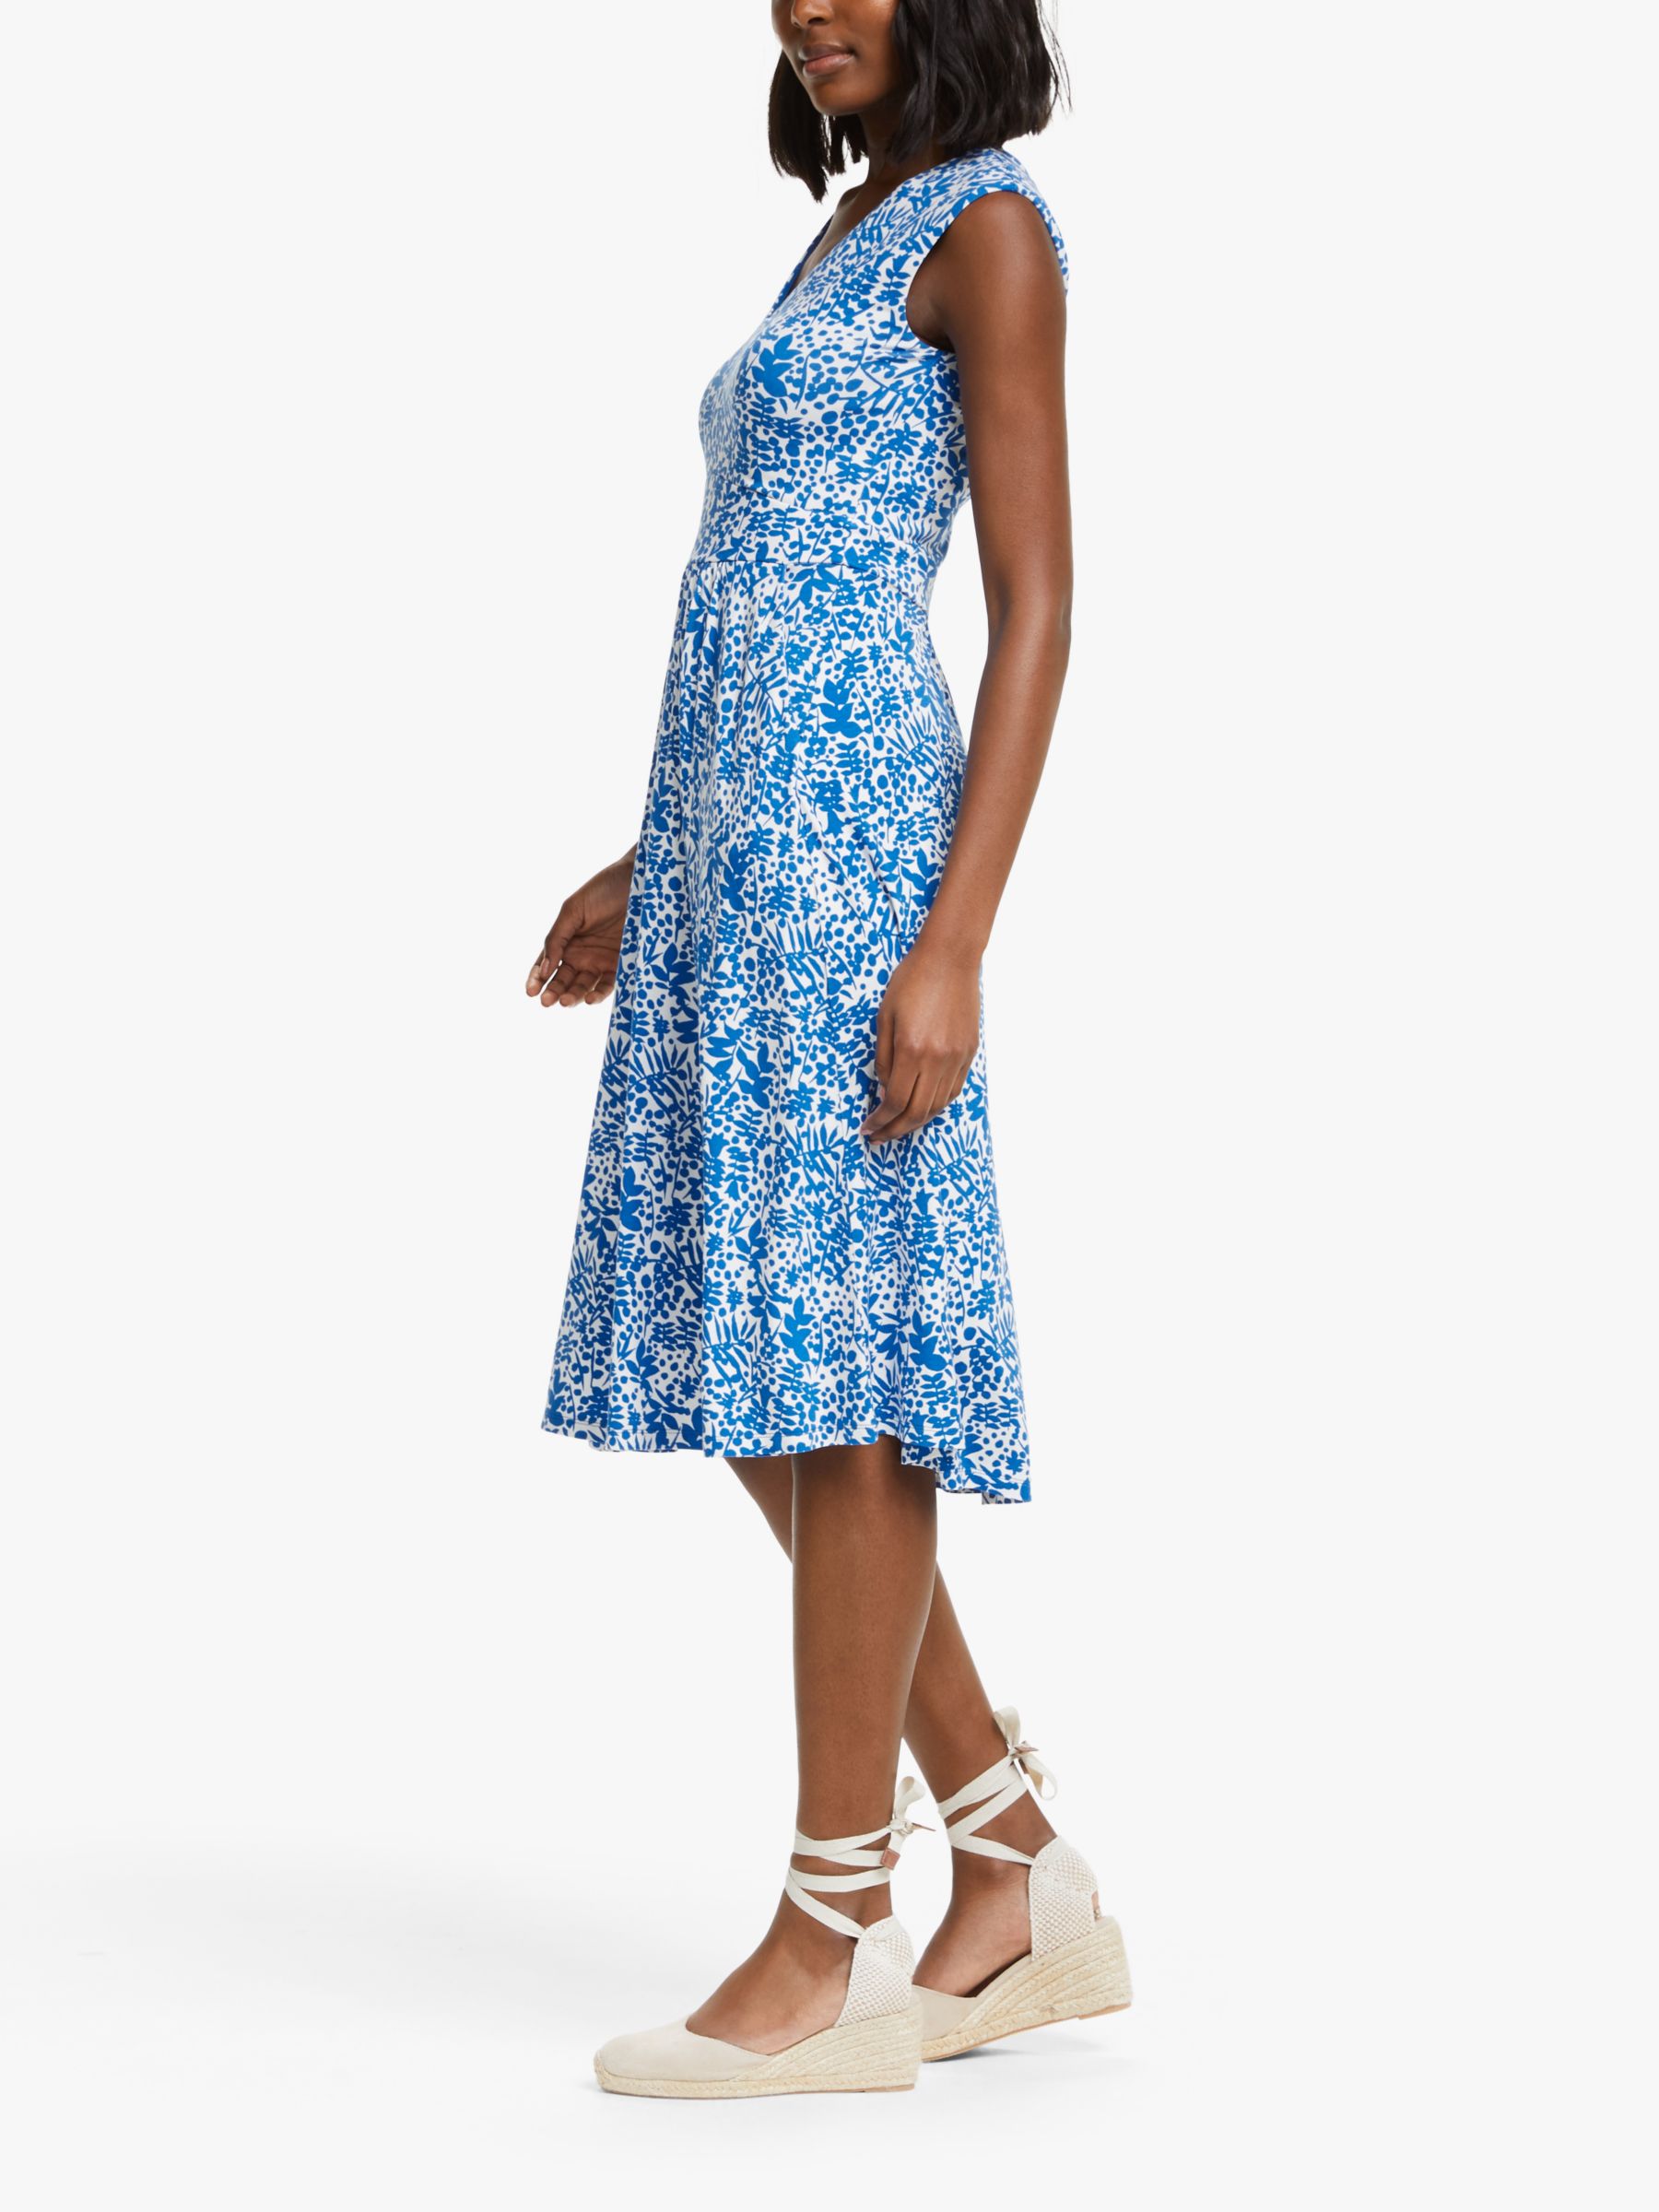 Boden Odilie Floral Jersey Dress, Blue/White at John Lewis & Partners